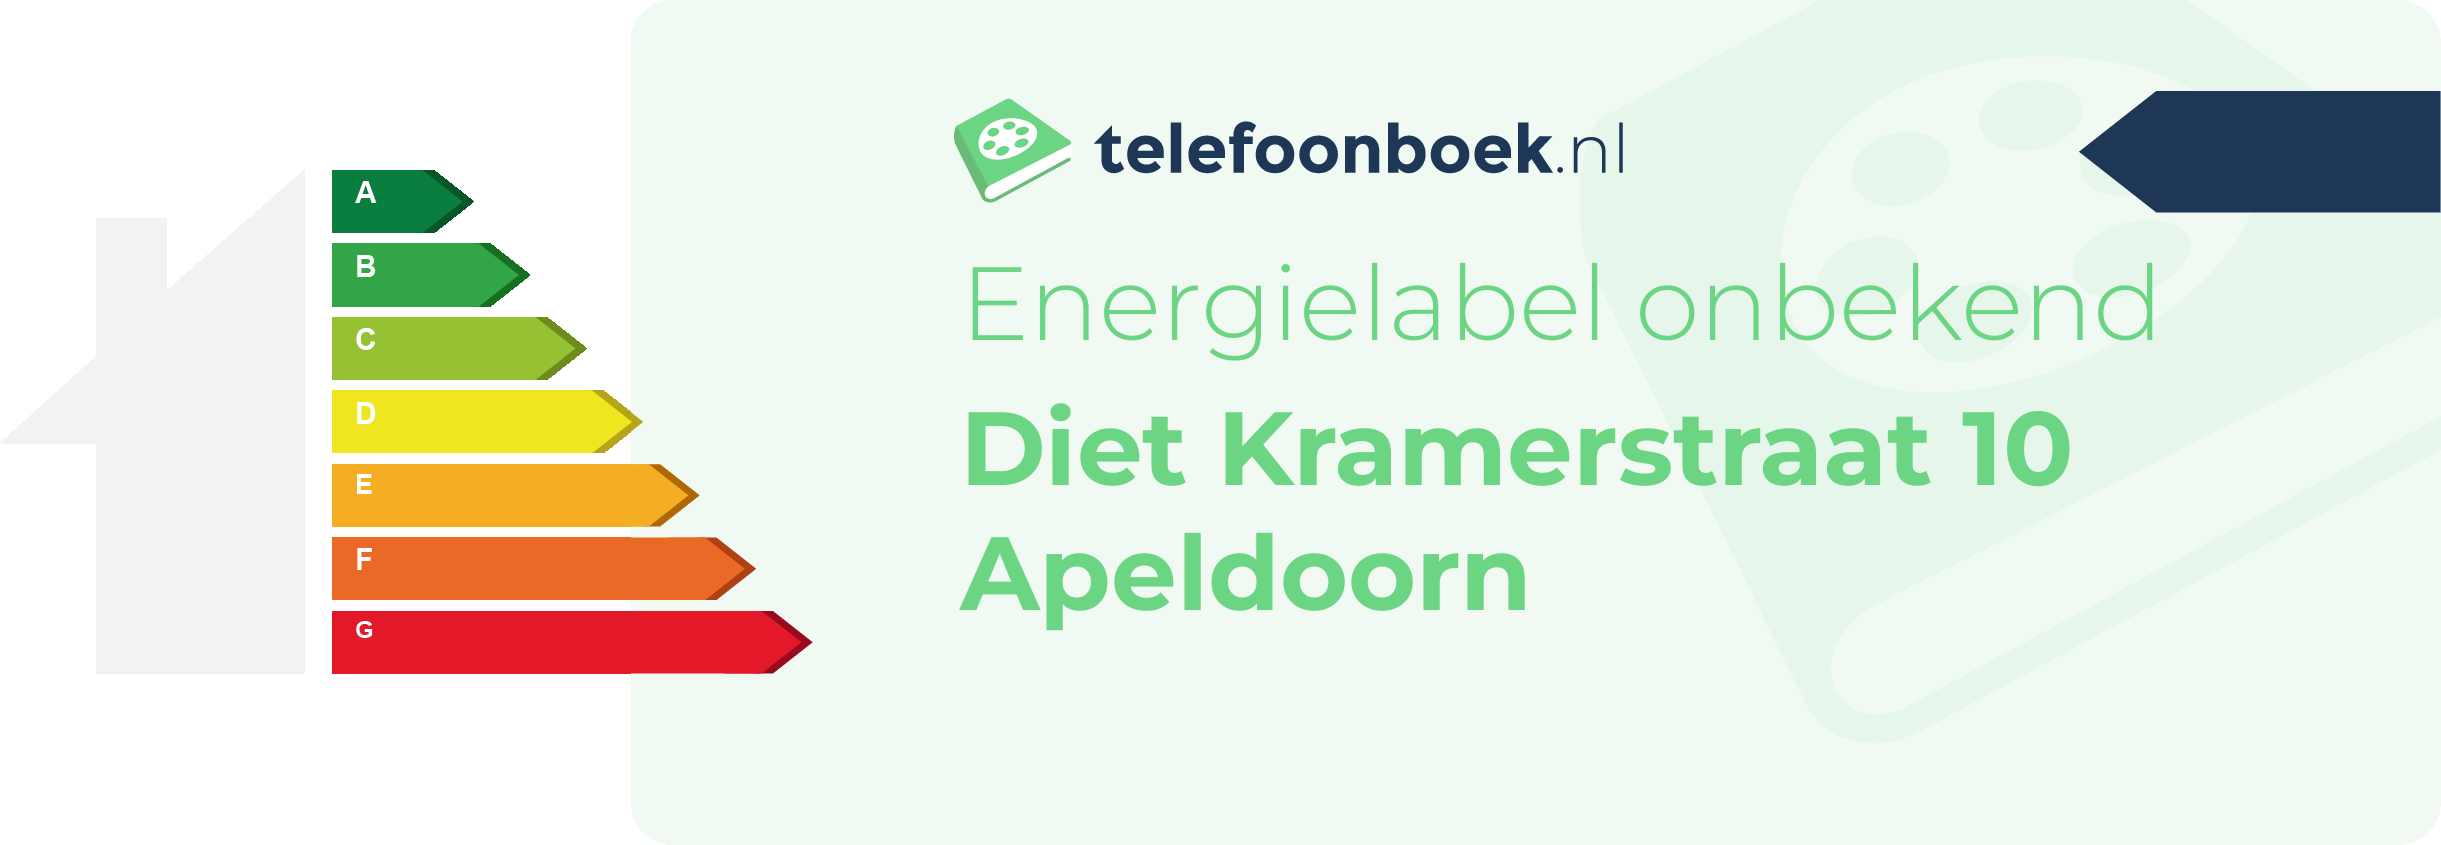 Energielabel Diet Kramerstraat 10 Apeldoorn